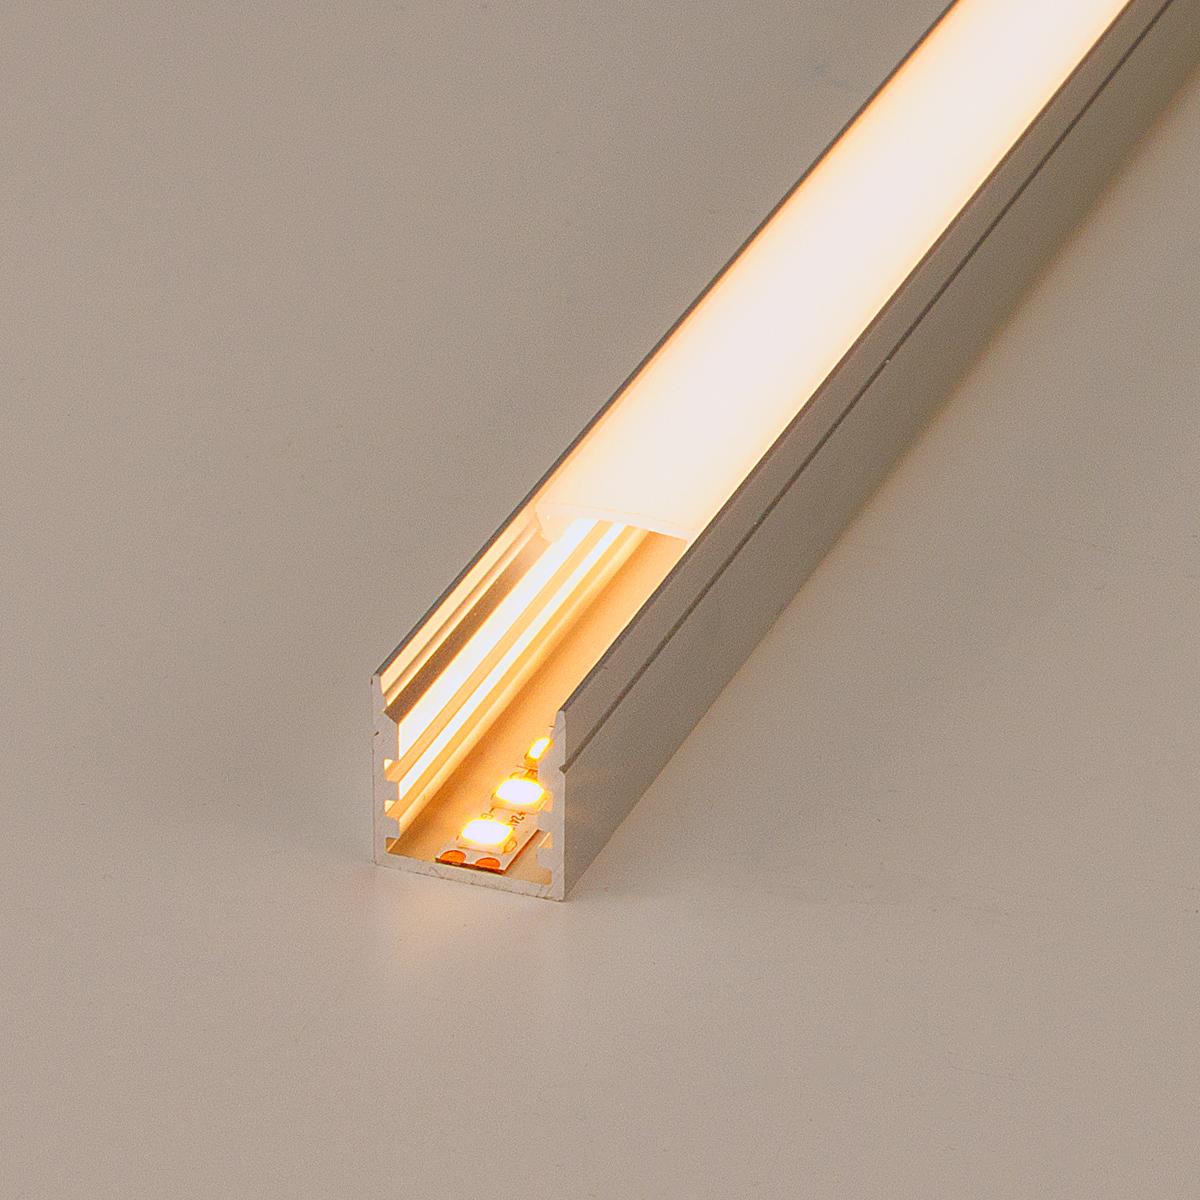 LED Aufbau U-Profil eloxiert 14 x 15mm opal 100cm